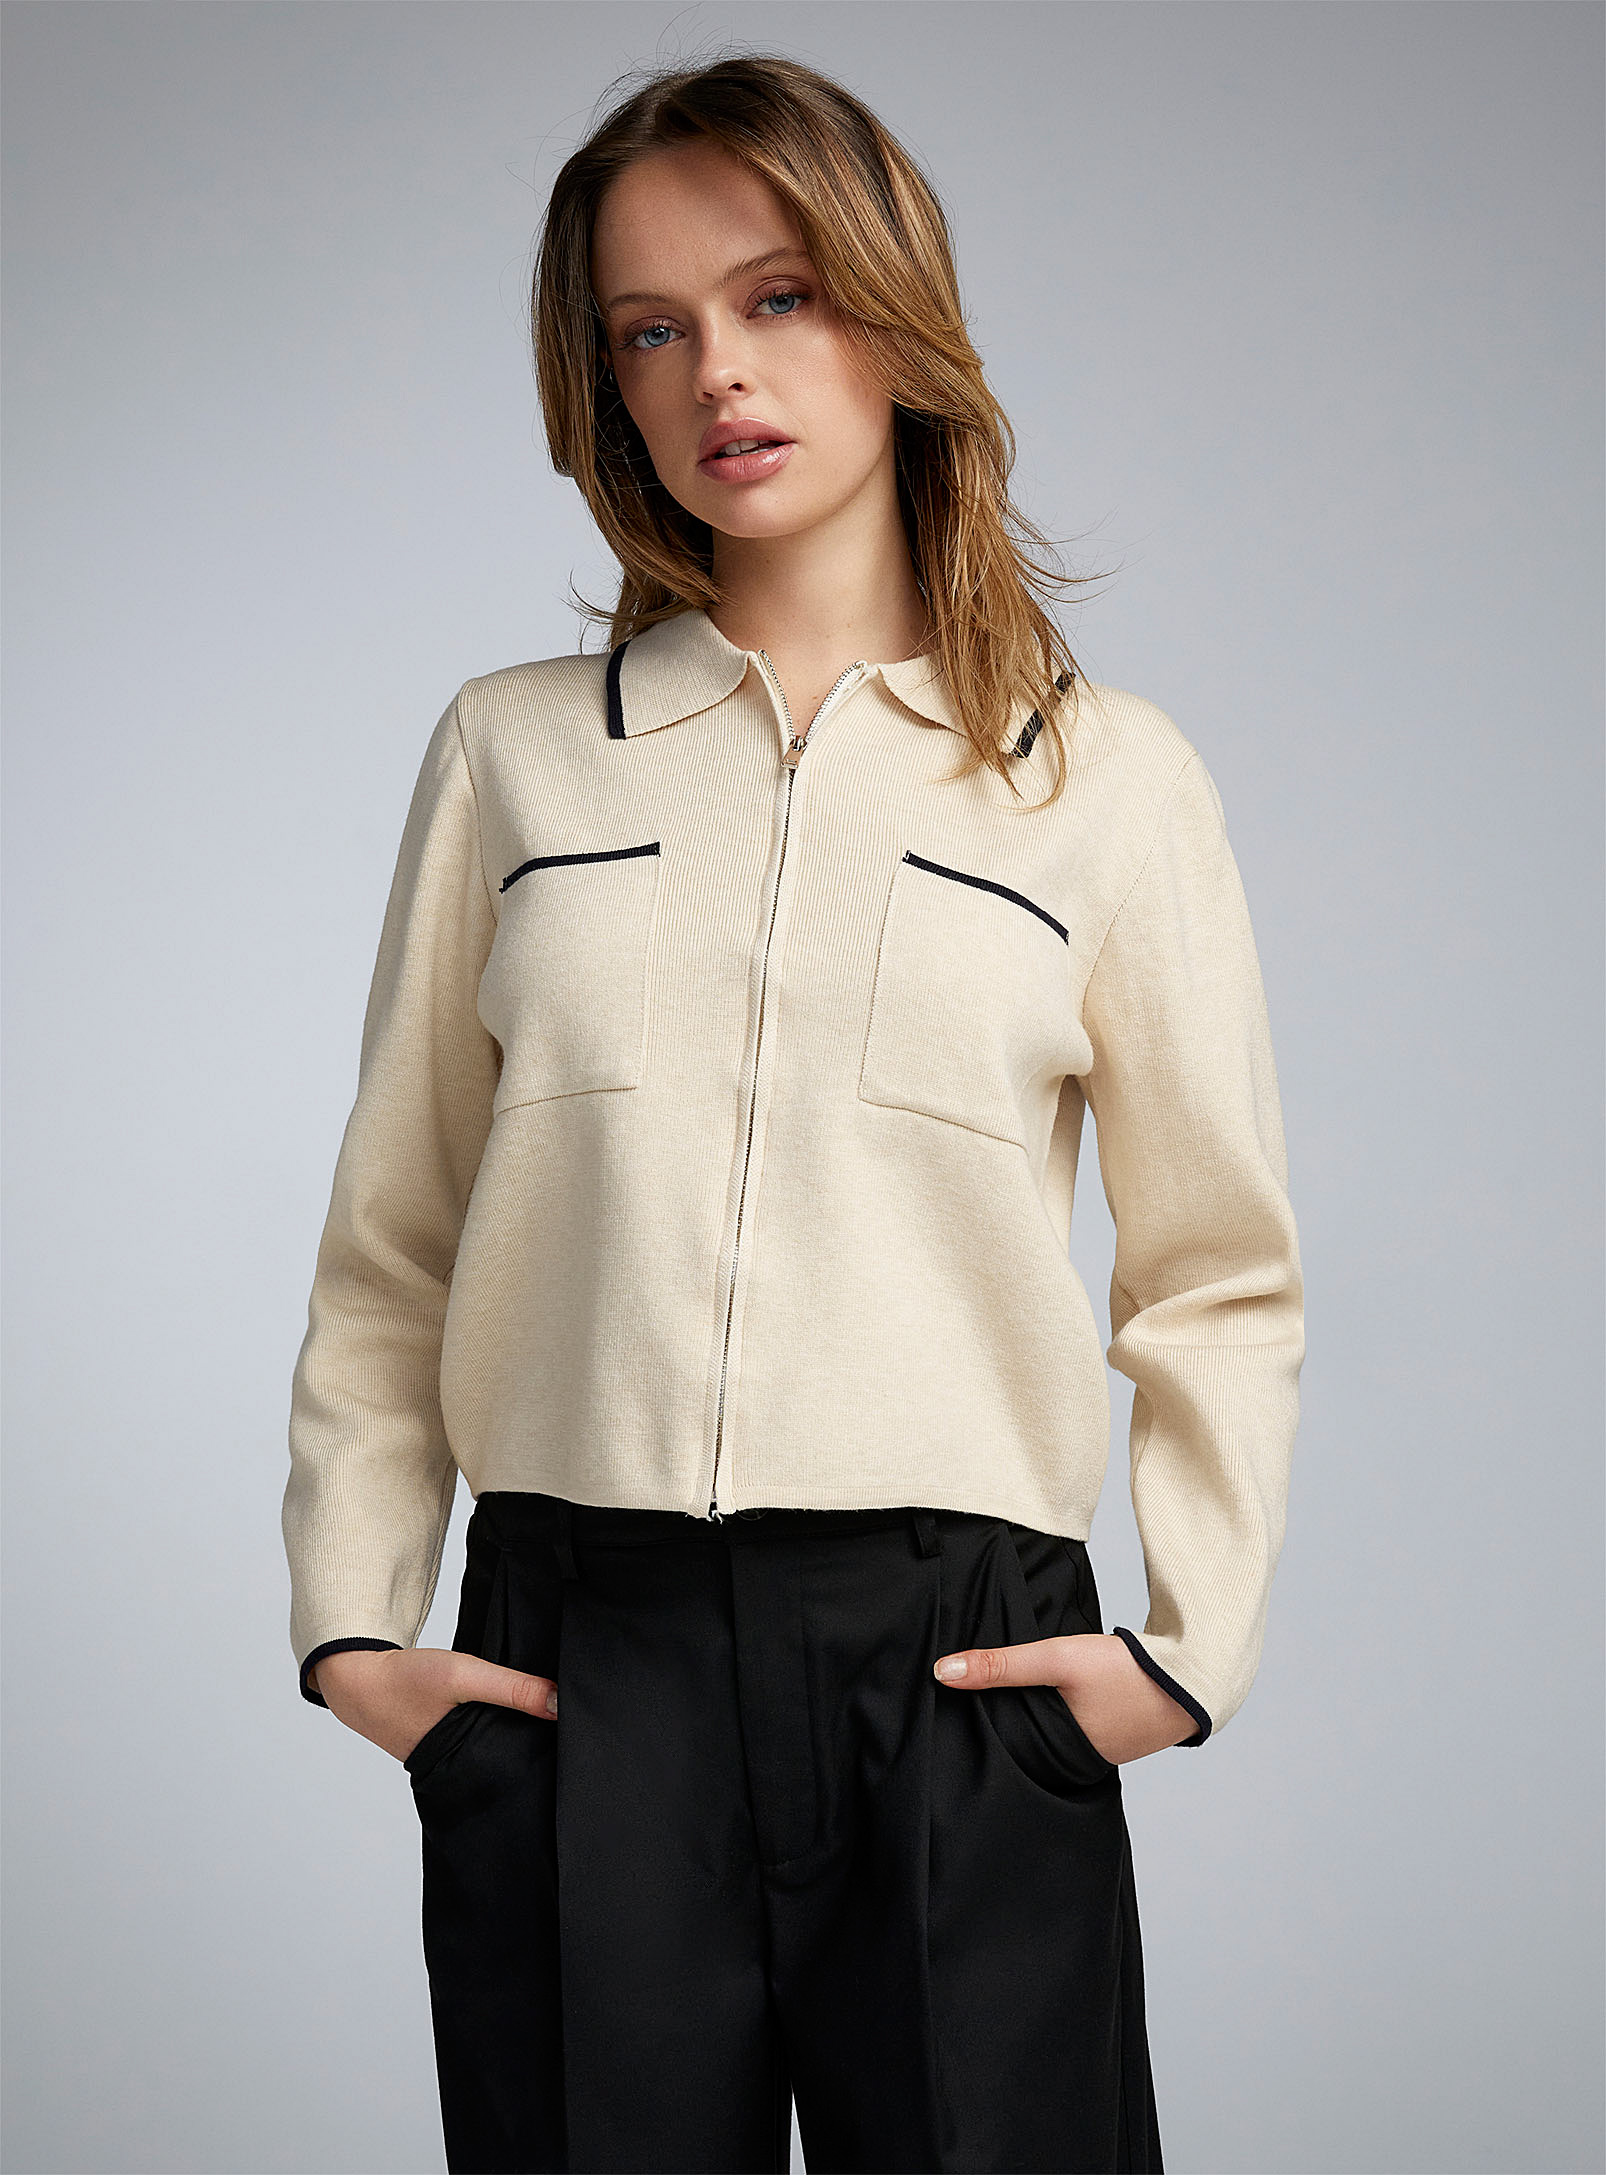 Twik - Women's Contrasting lines Polo Shirt-collar zippered cardigan